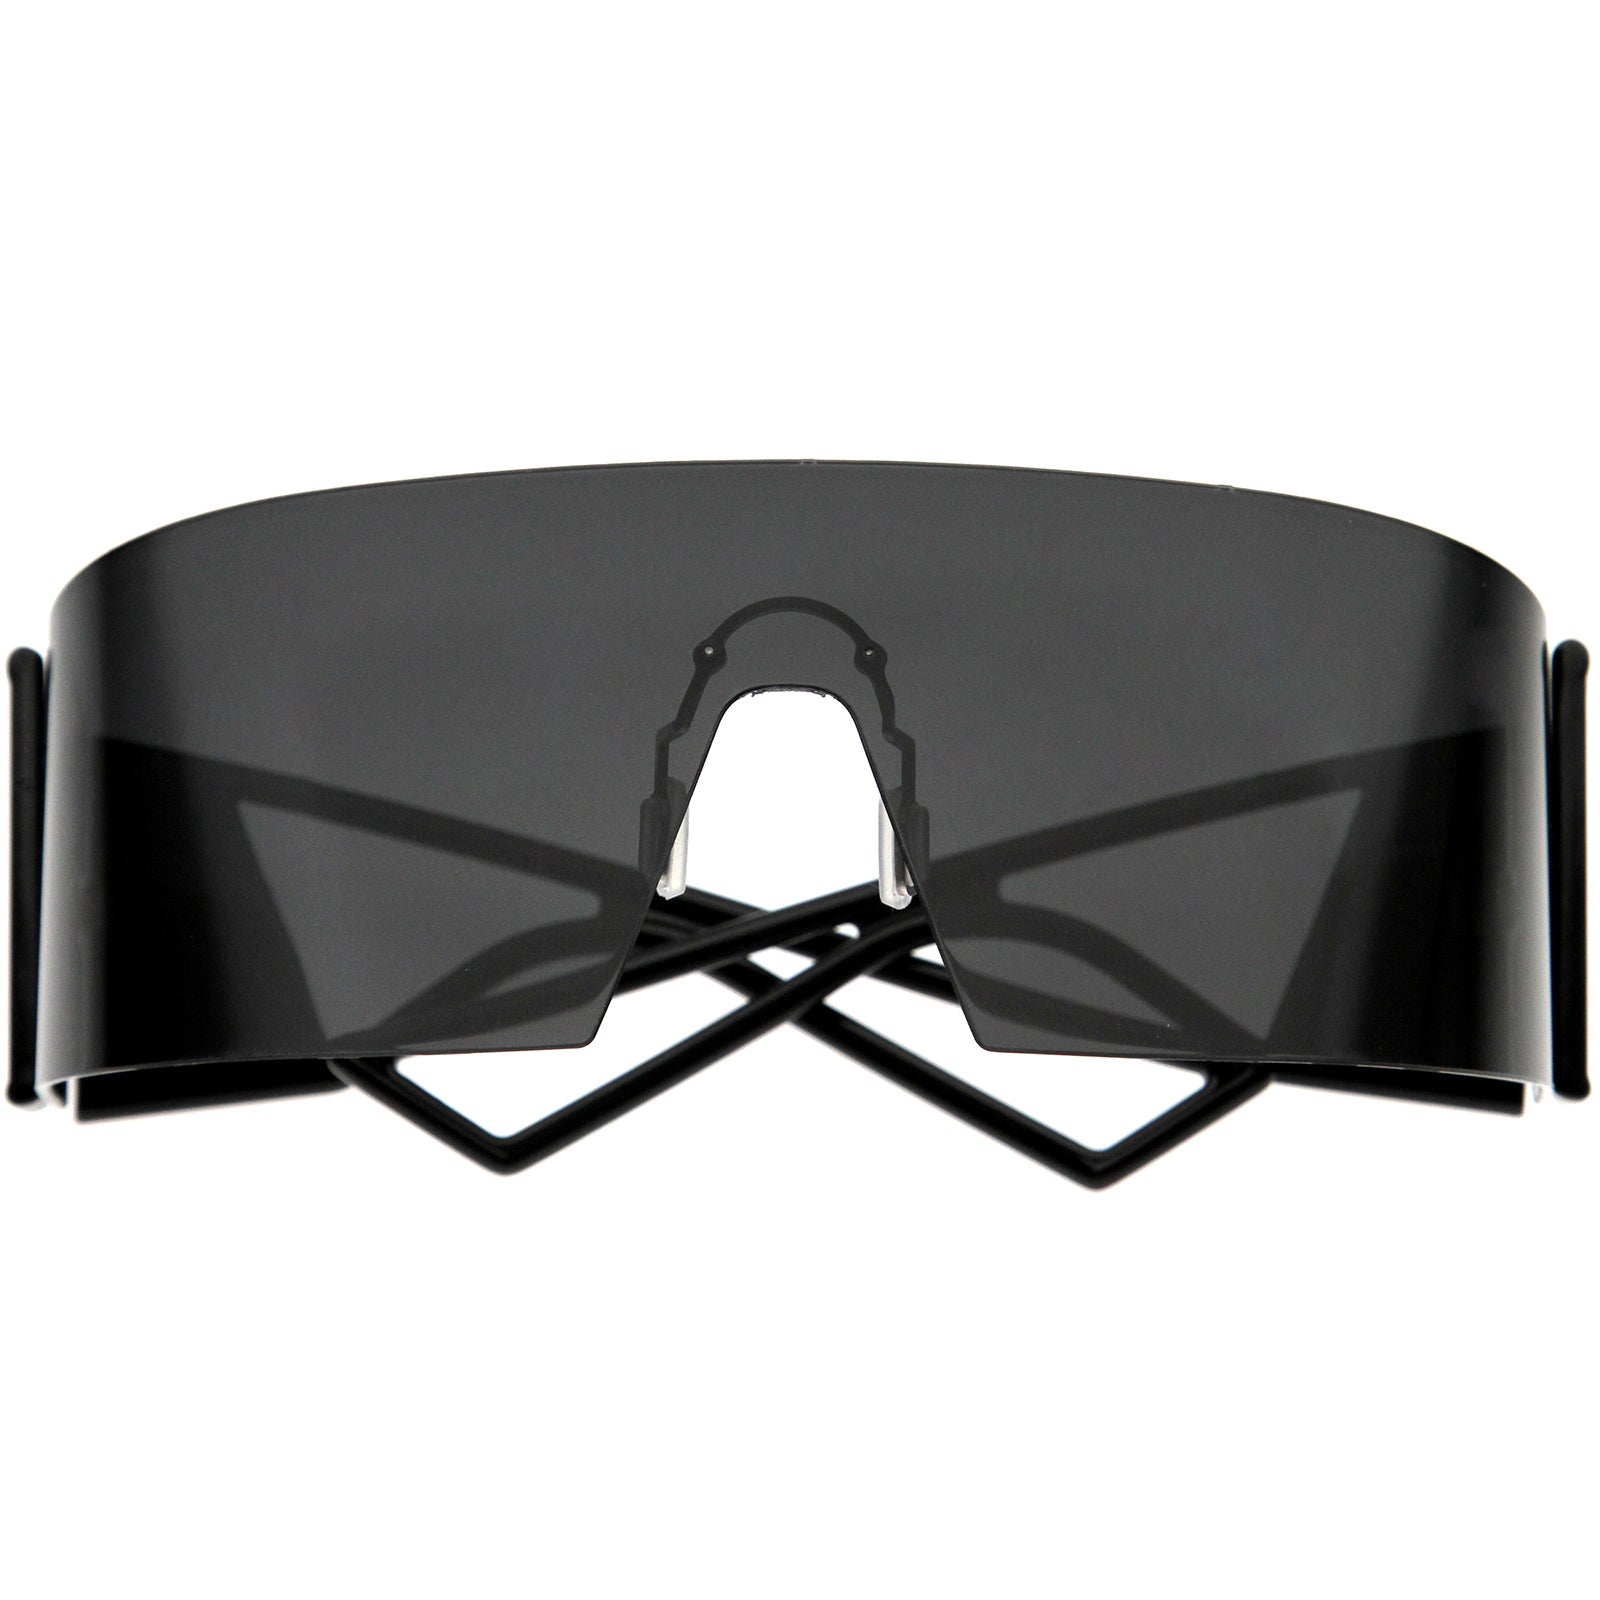 Retro 80s Futuristic Cyclops Cyberpunk Visor Sunglasses 95mm